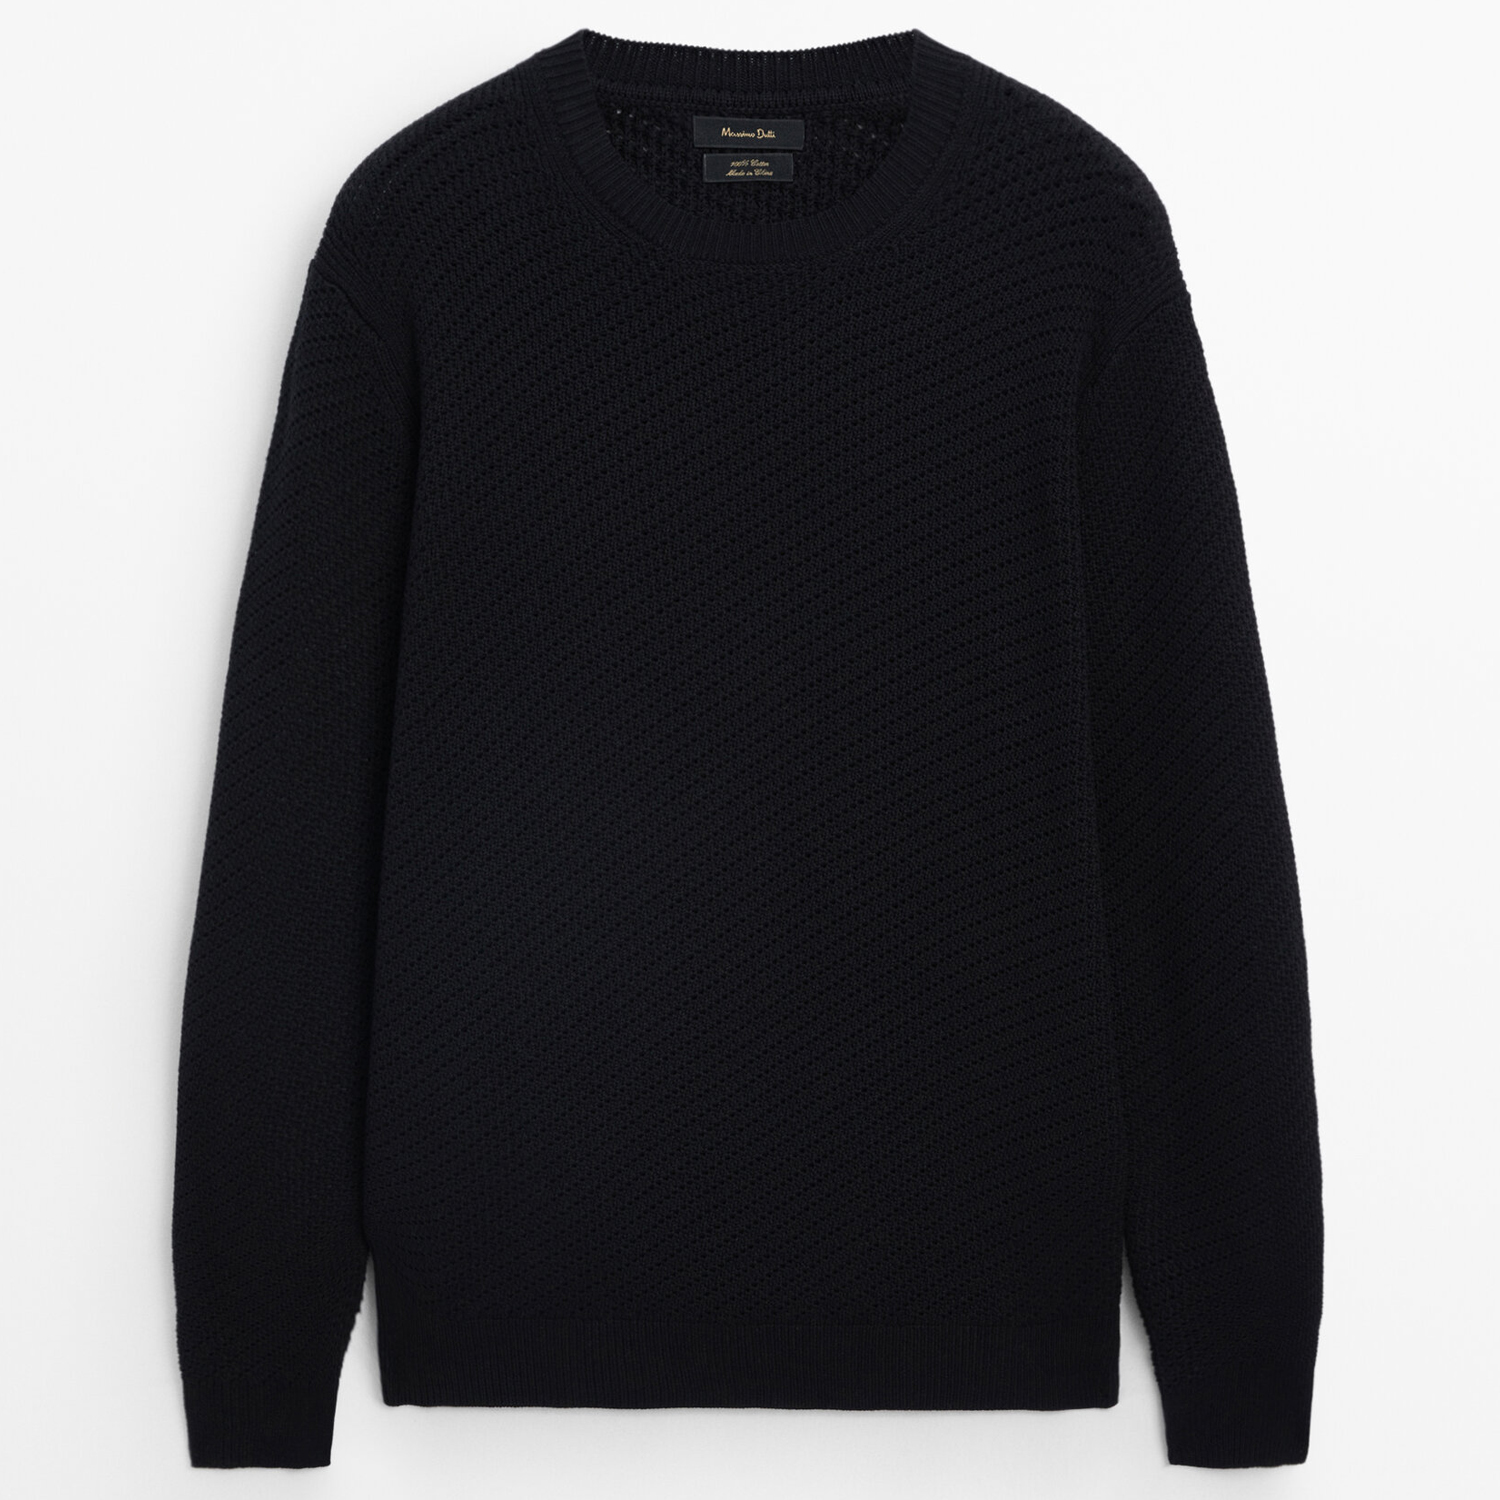 Свитер Massimo Dutti Crew Neck Cotton Mesh Knit, черный свитер massimo dutti crew neck cotton mesh knit черный